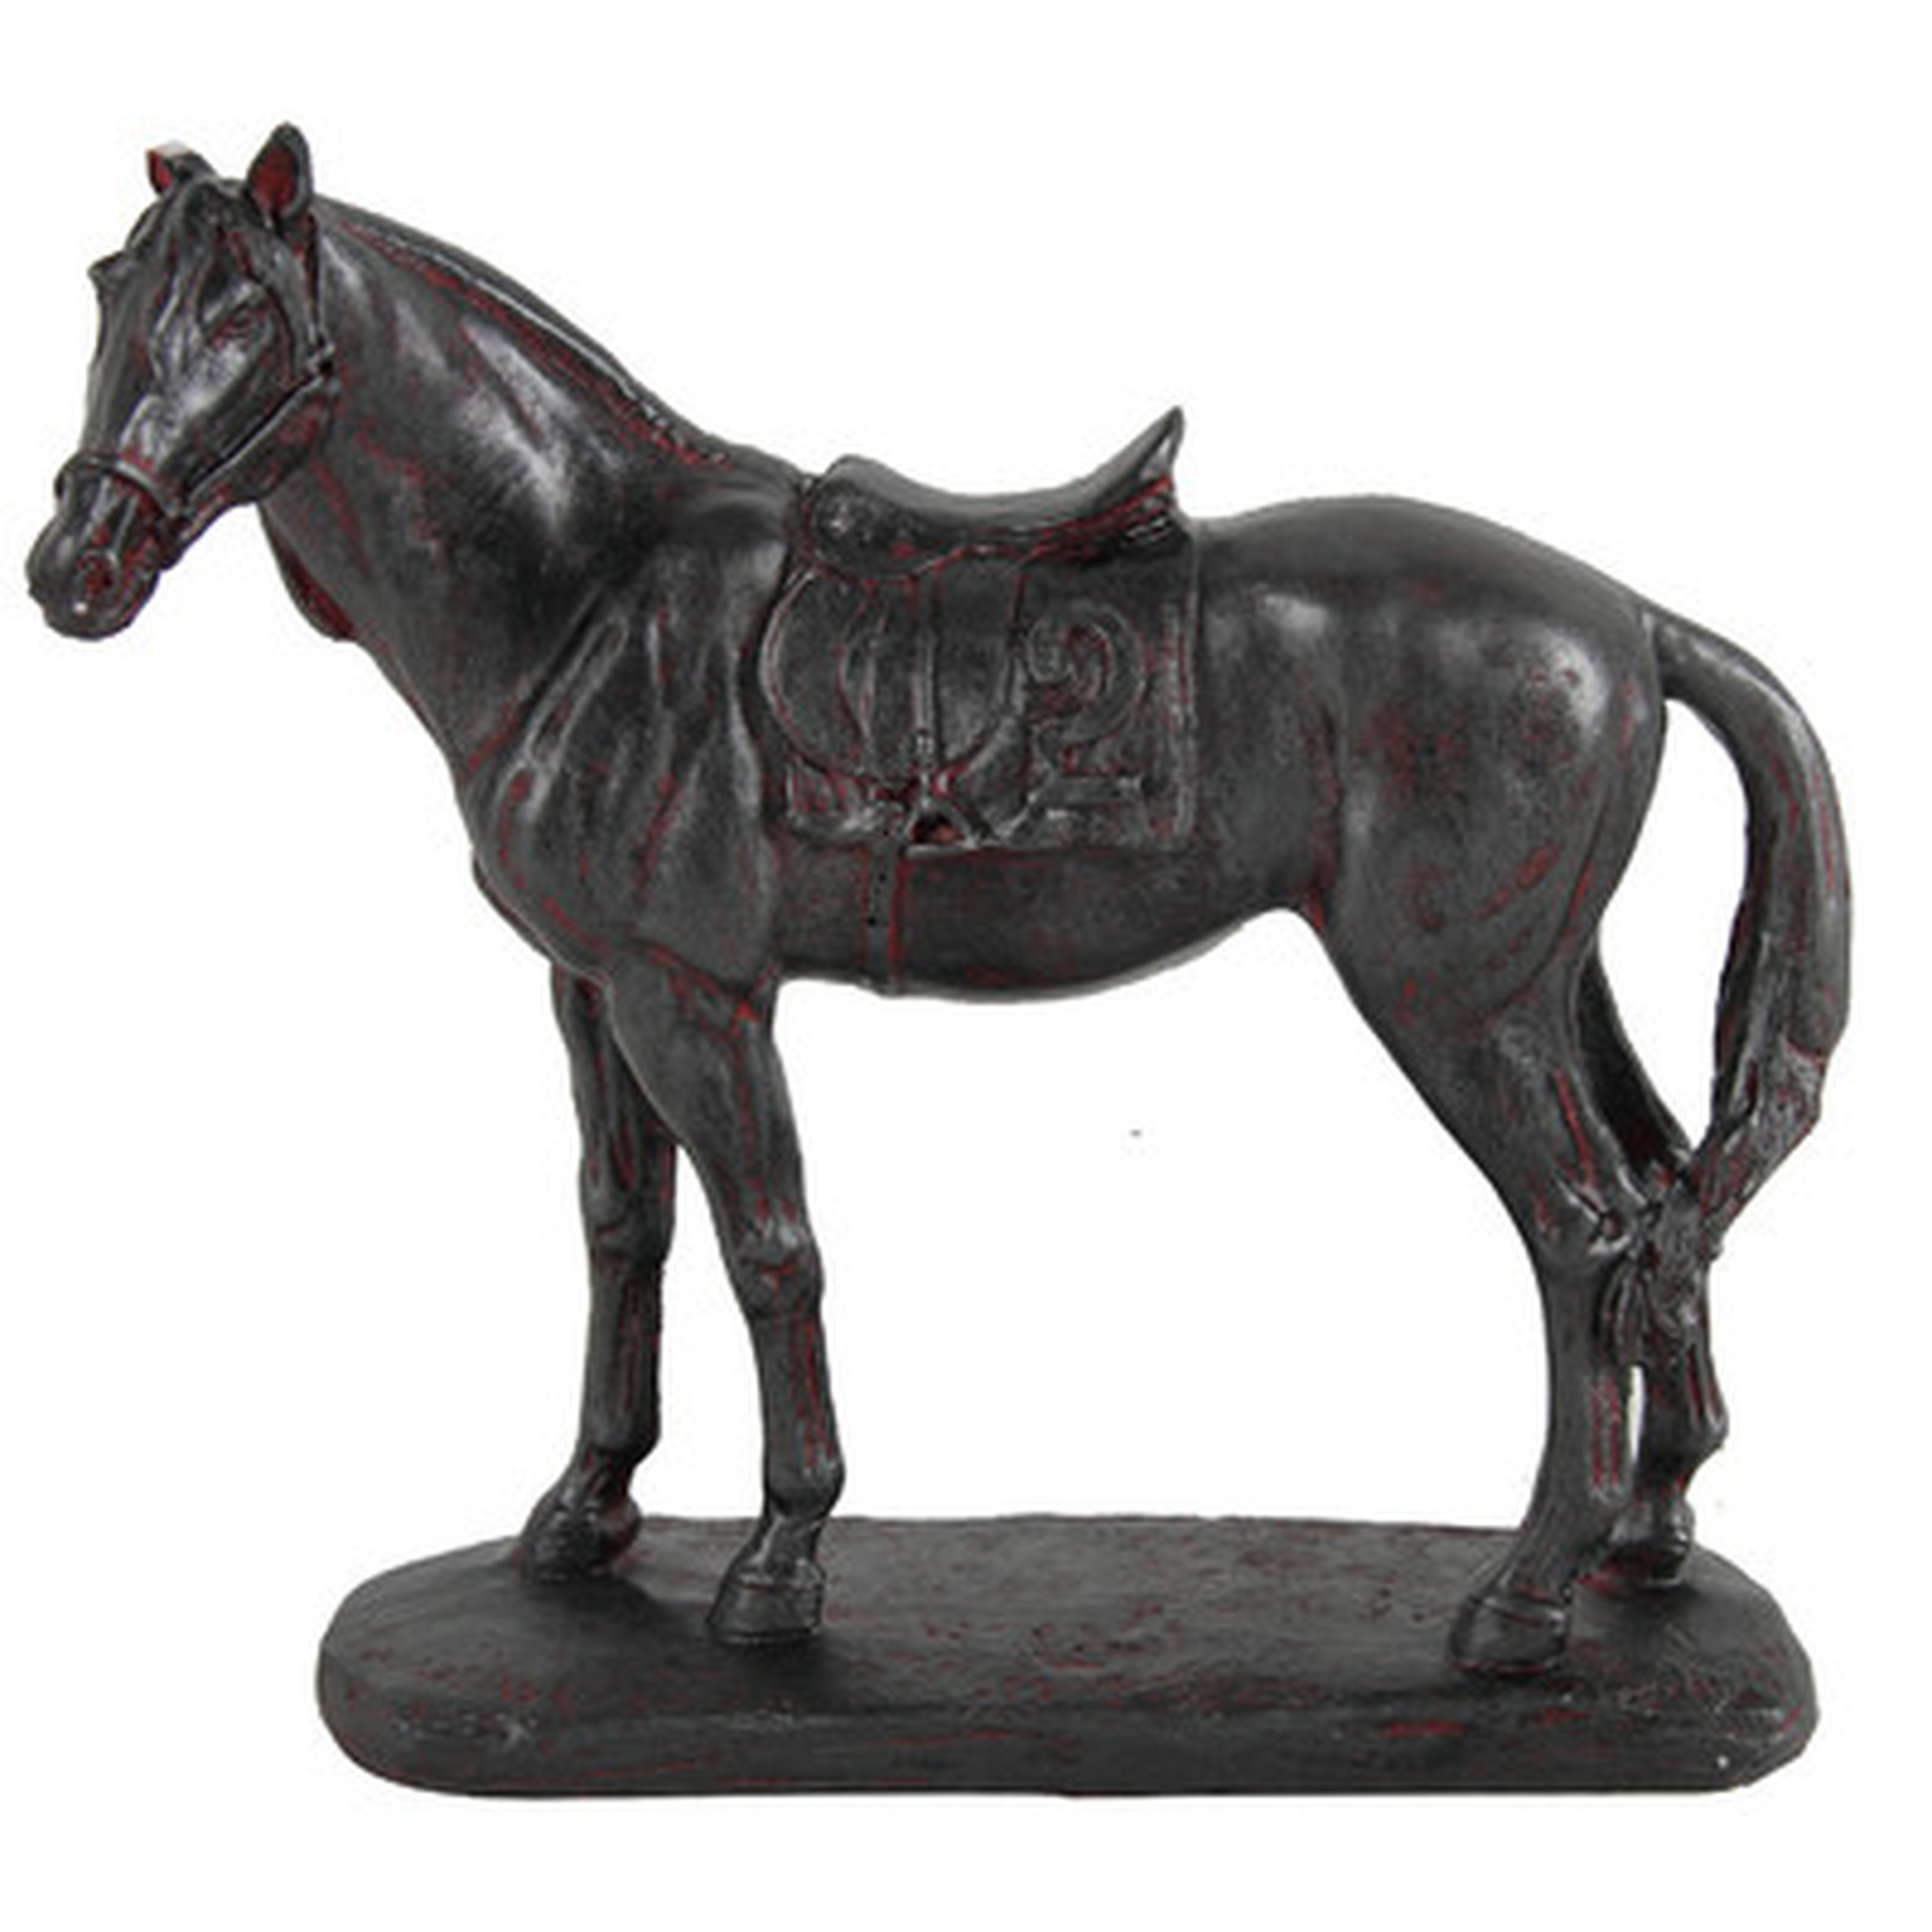 Waddell Horse Figurine - Wayfair